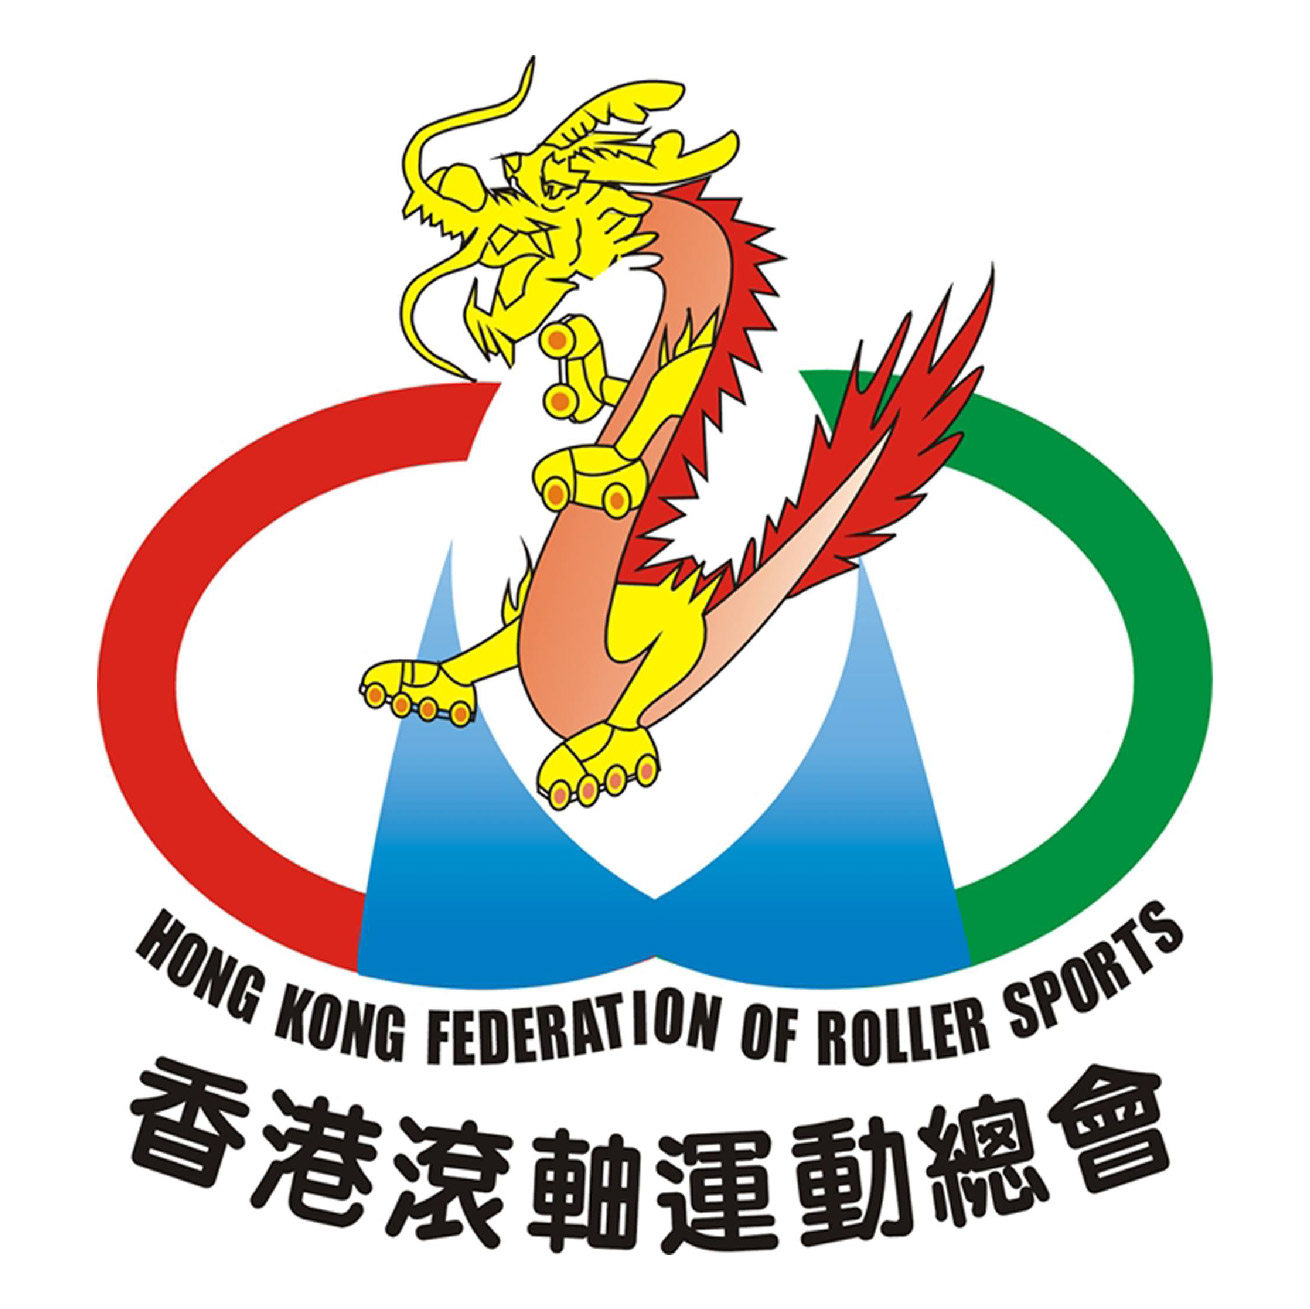 HONG KONG FEDERATION OF ROLLER SPORTS